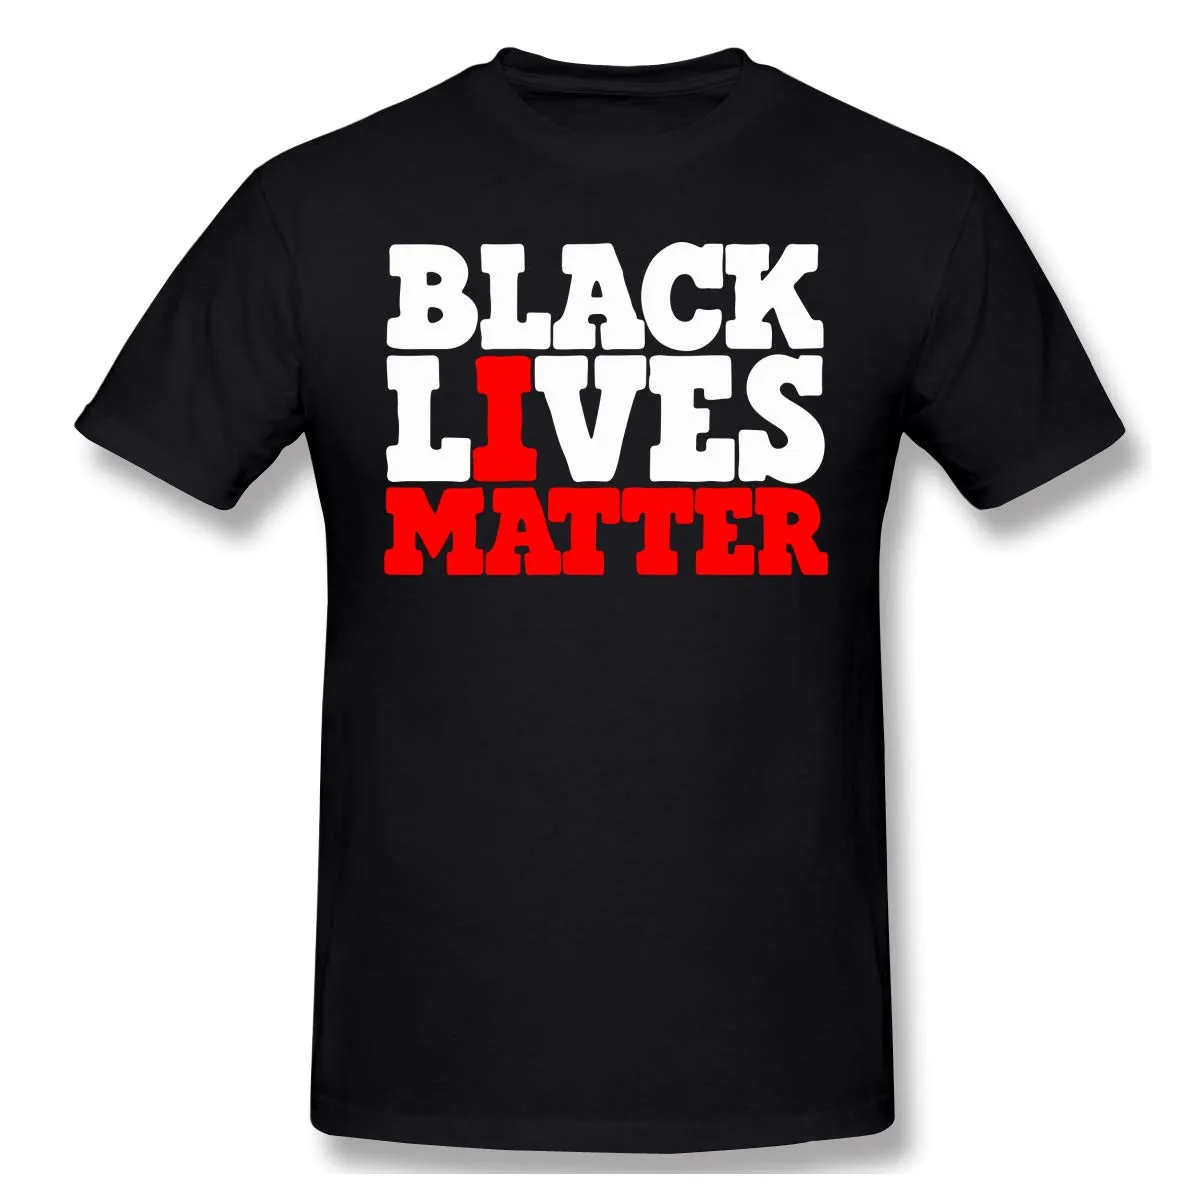 US Stock Black Lives Matter 나는 남성을위한 새로운 티셔츠를 숨을 멈출 수 없습니다.